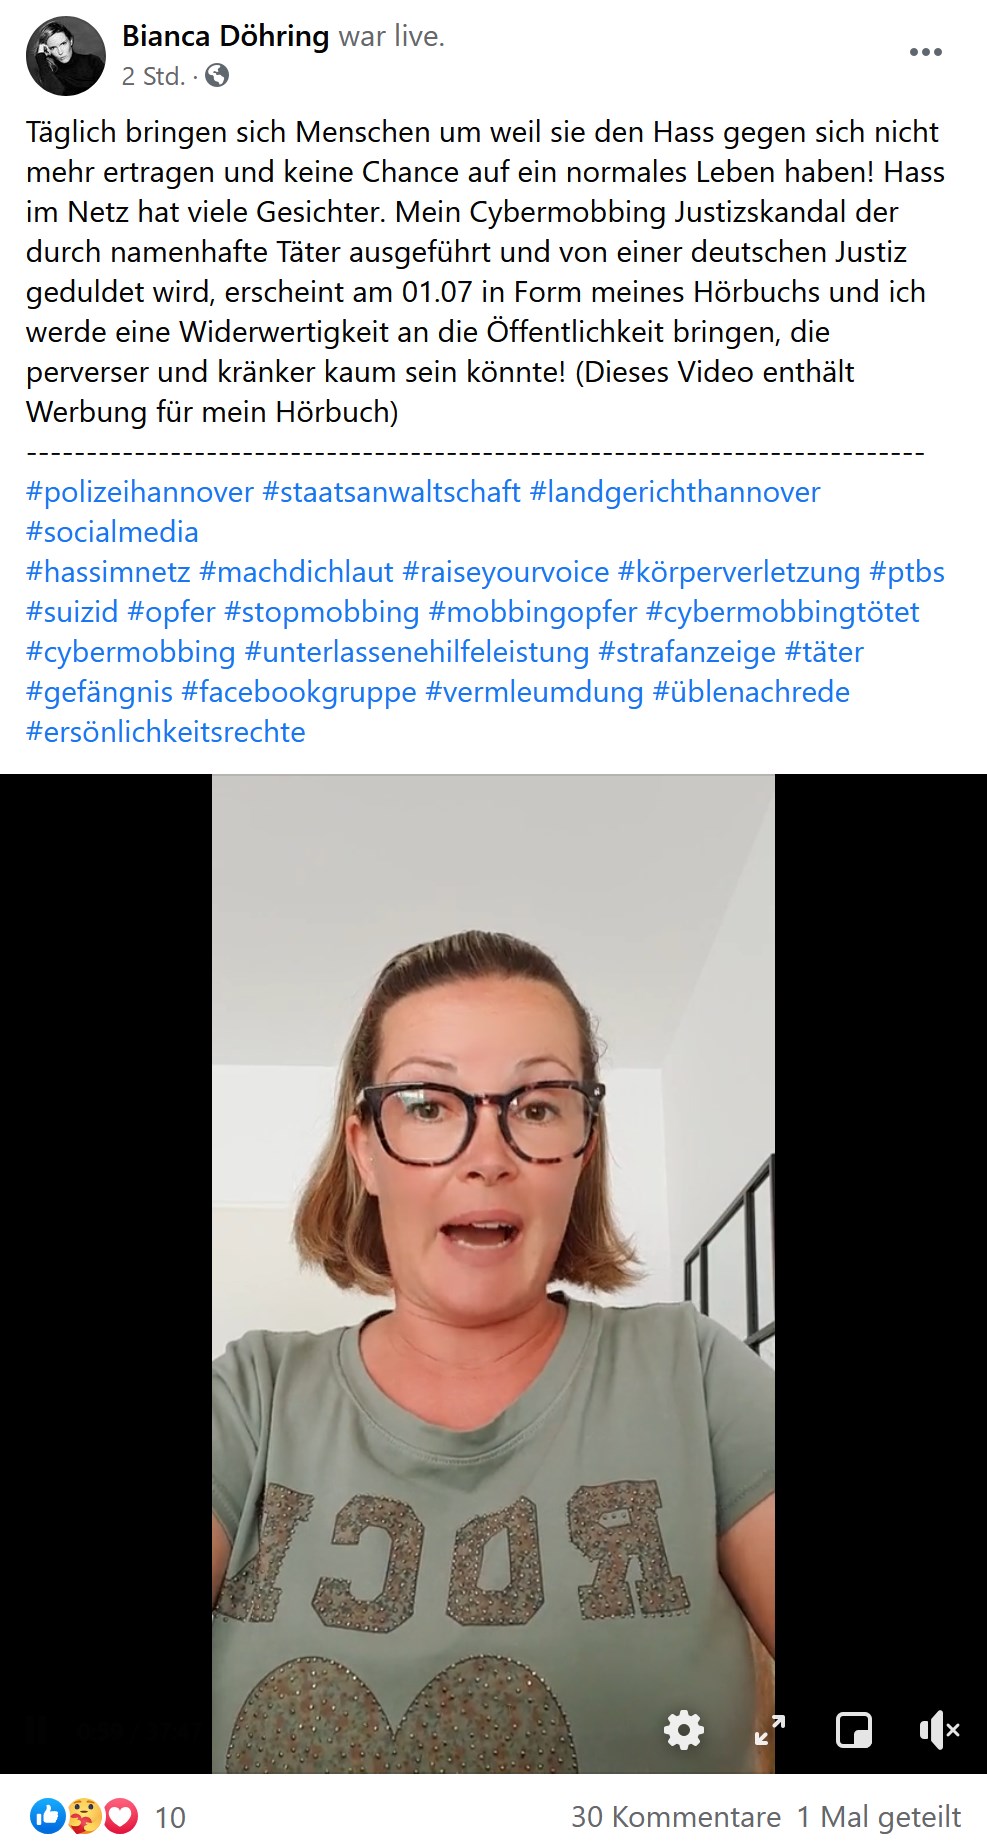 Bianca Döhring berichtet über Täter - Werbung Cybermobbing Hörbuch Mallorca Hannover kriminelle Straftaten Facebook 30.05.2021 Justizskandal Hass Polizei